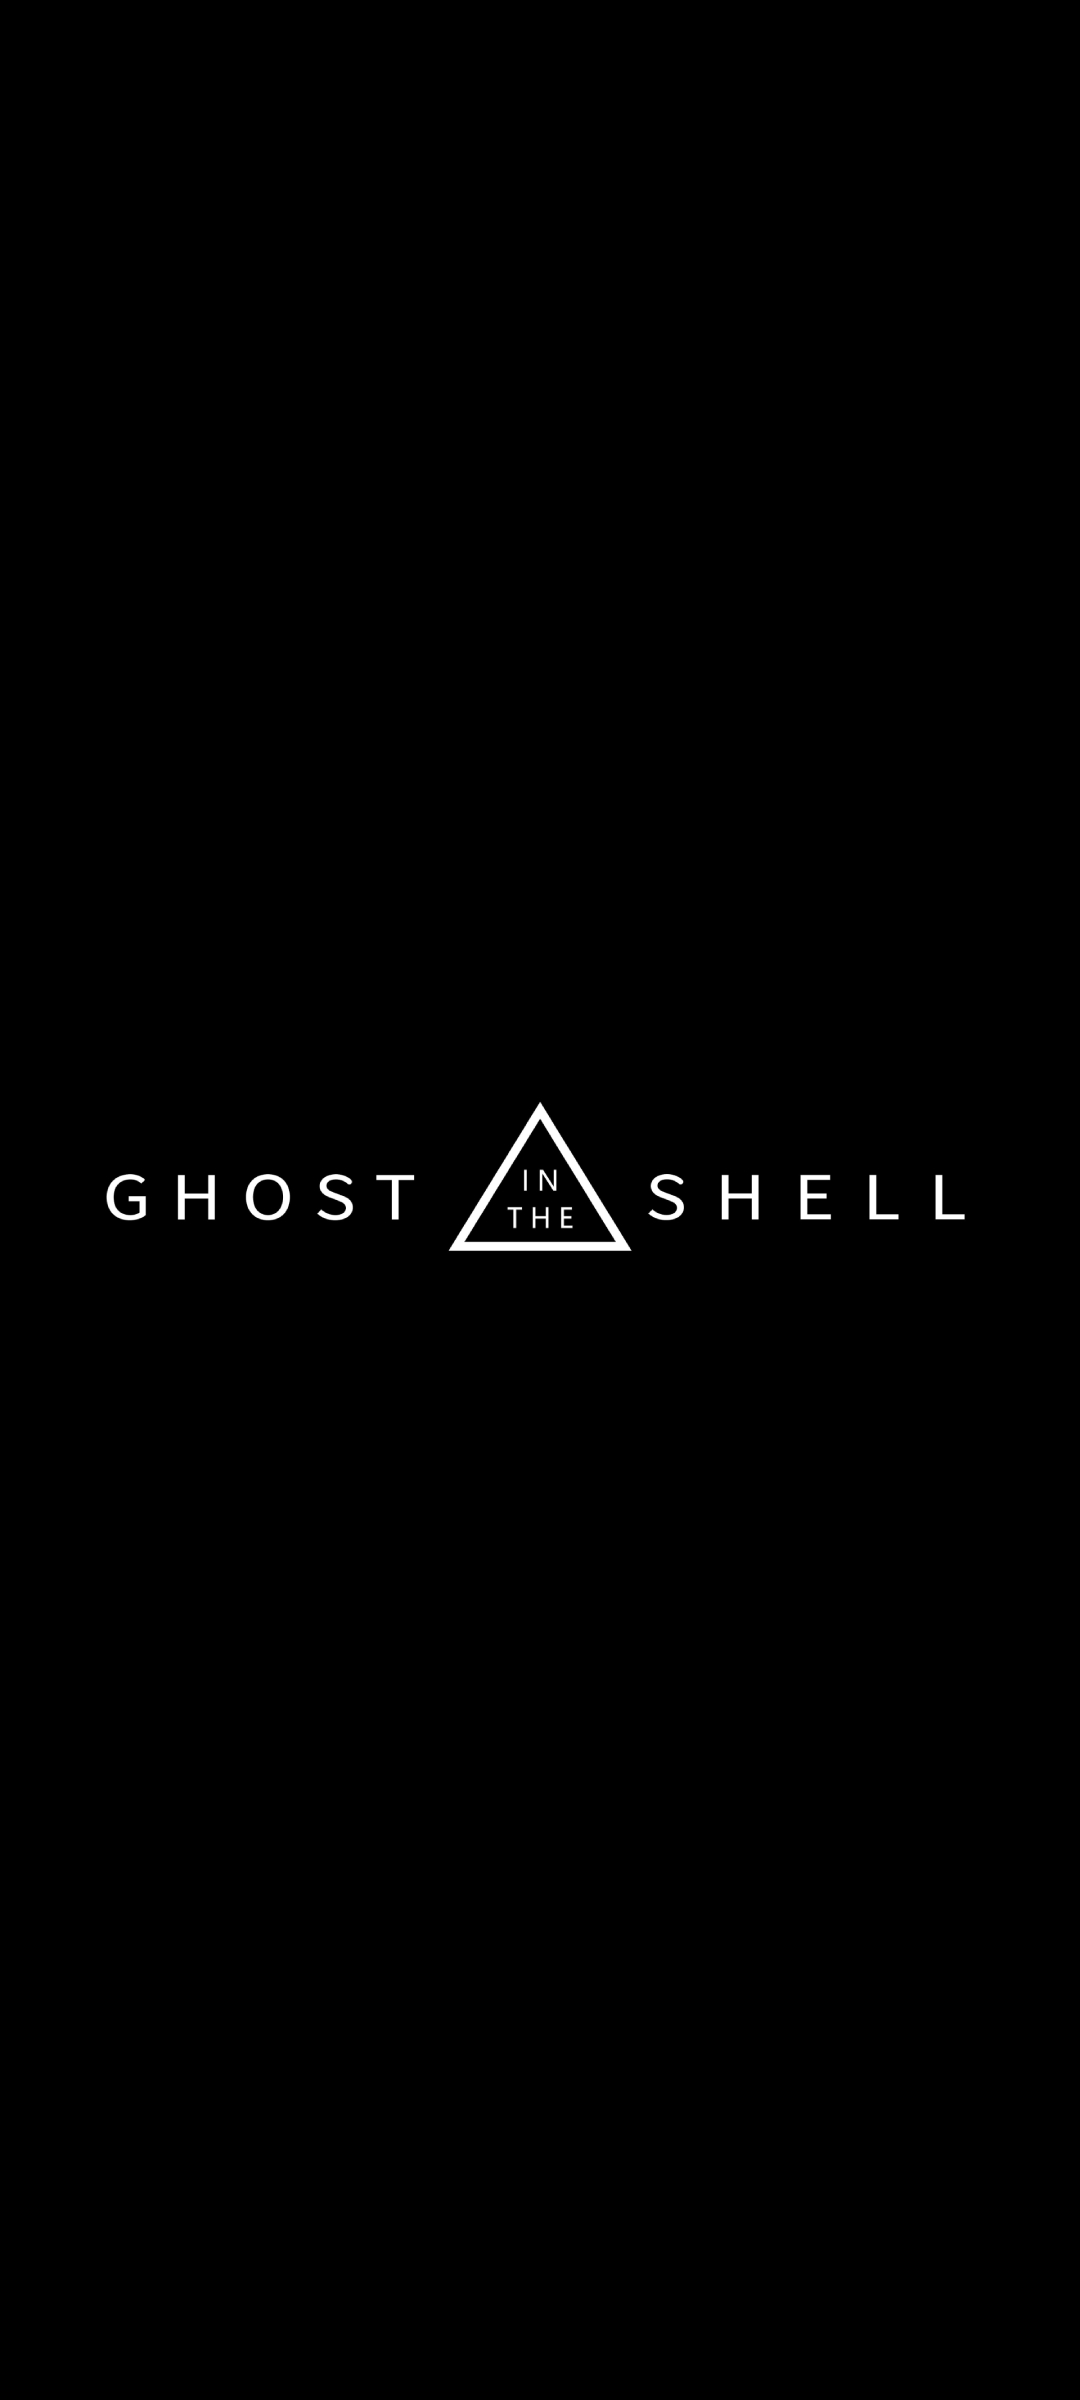 Ghost In The Shell Galaxy S21 5g 壁紙 待ち受け スマラン